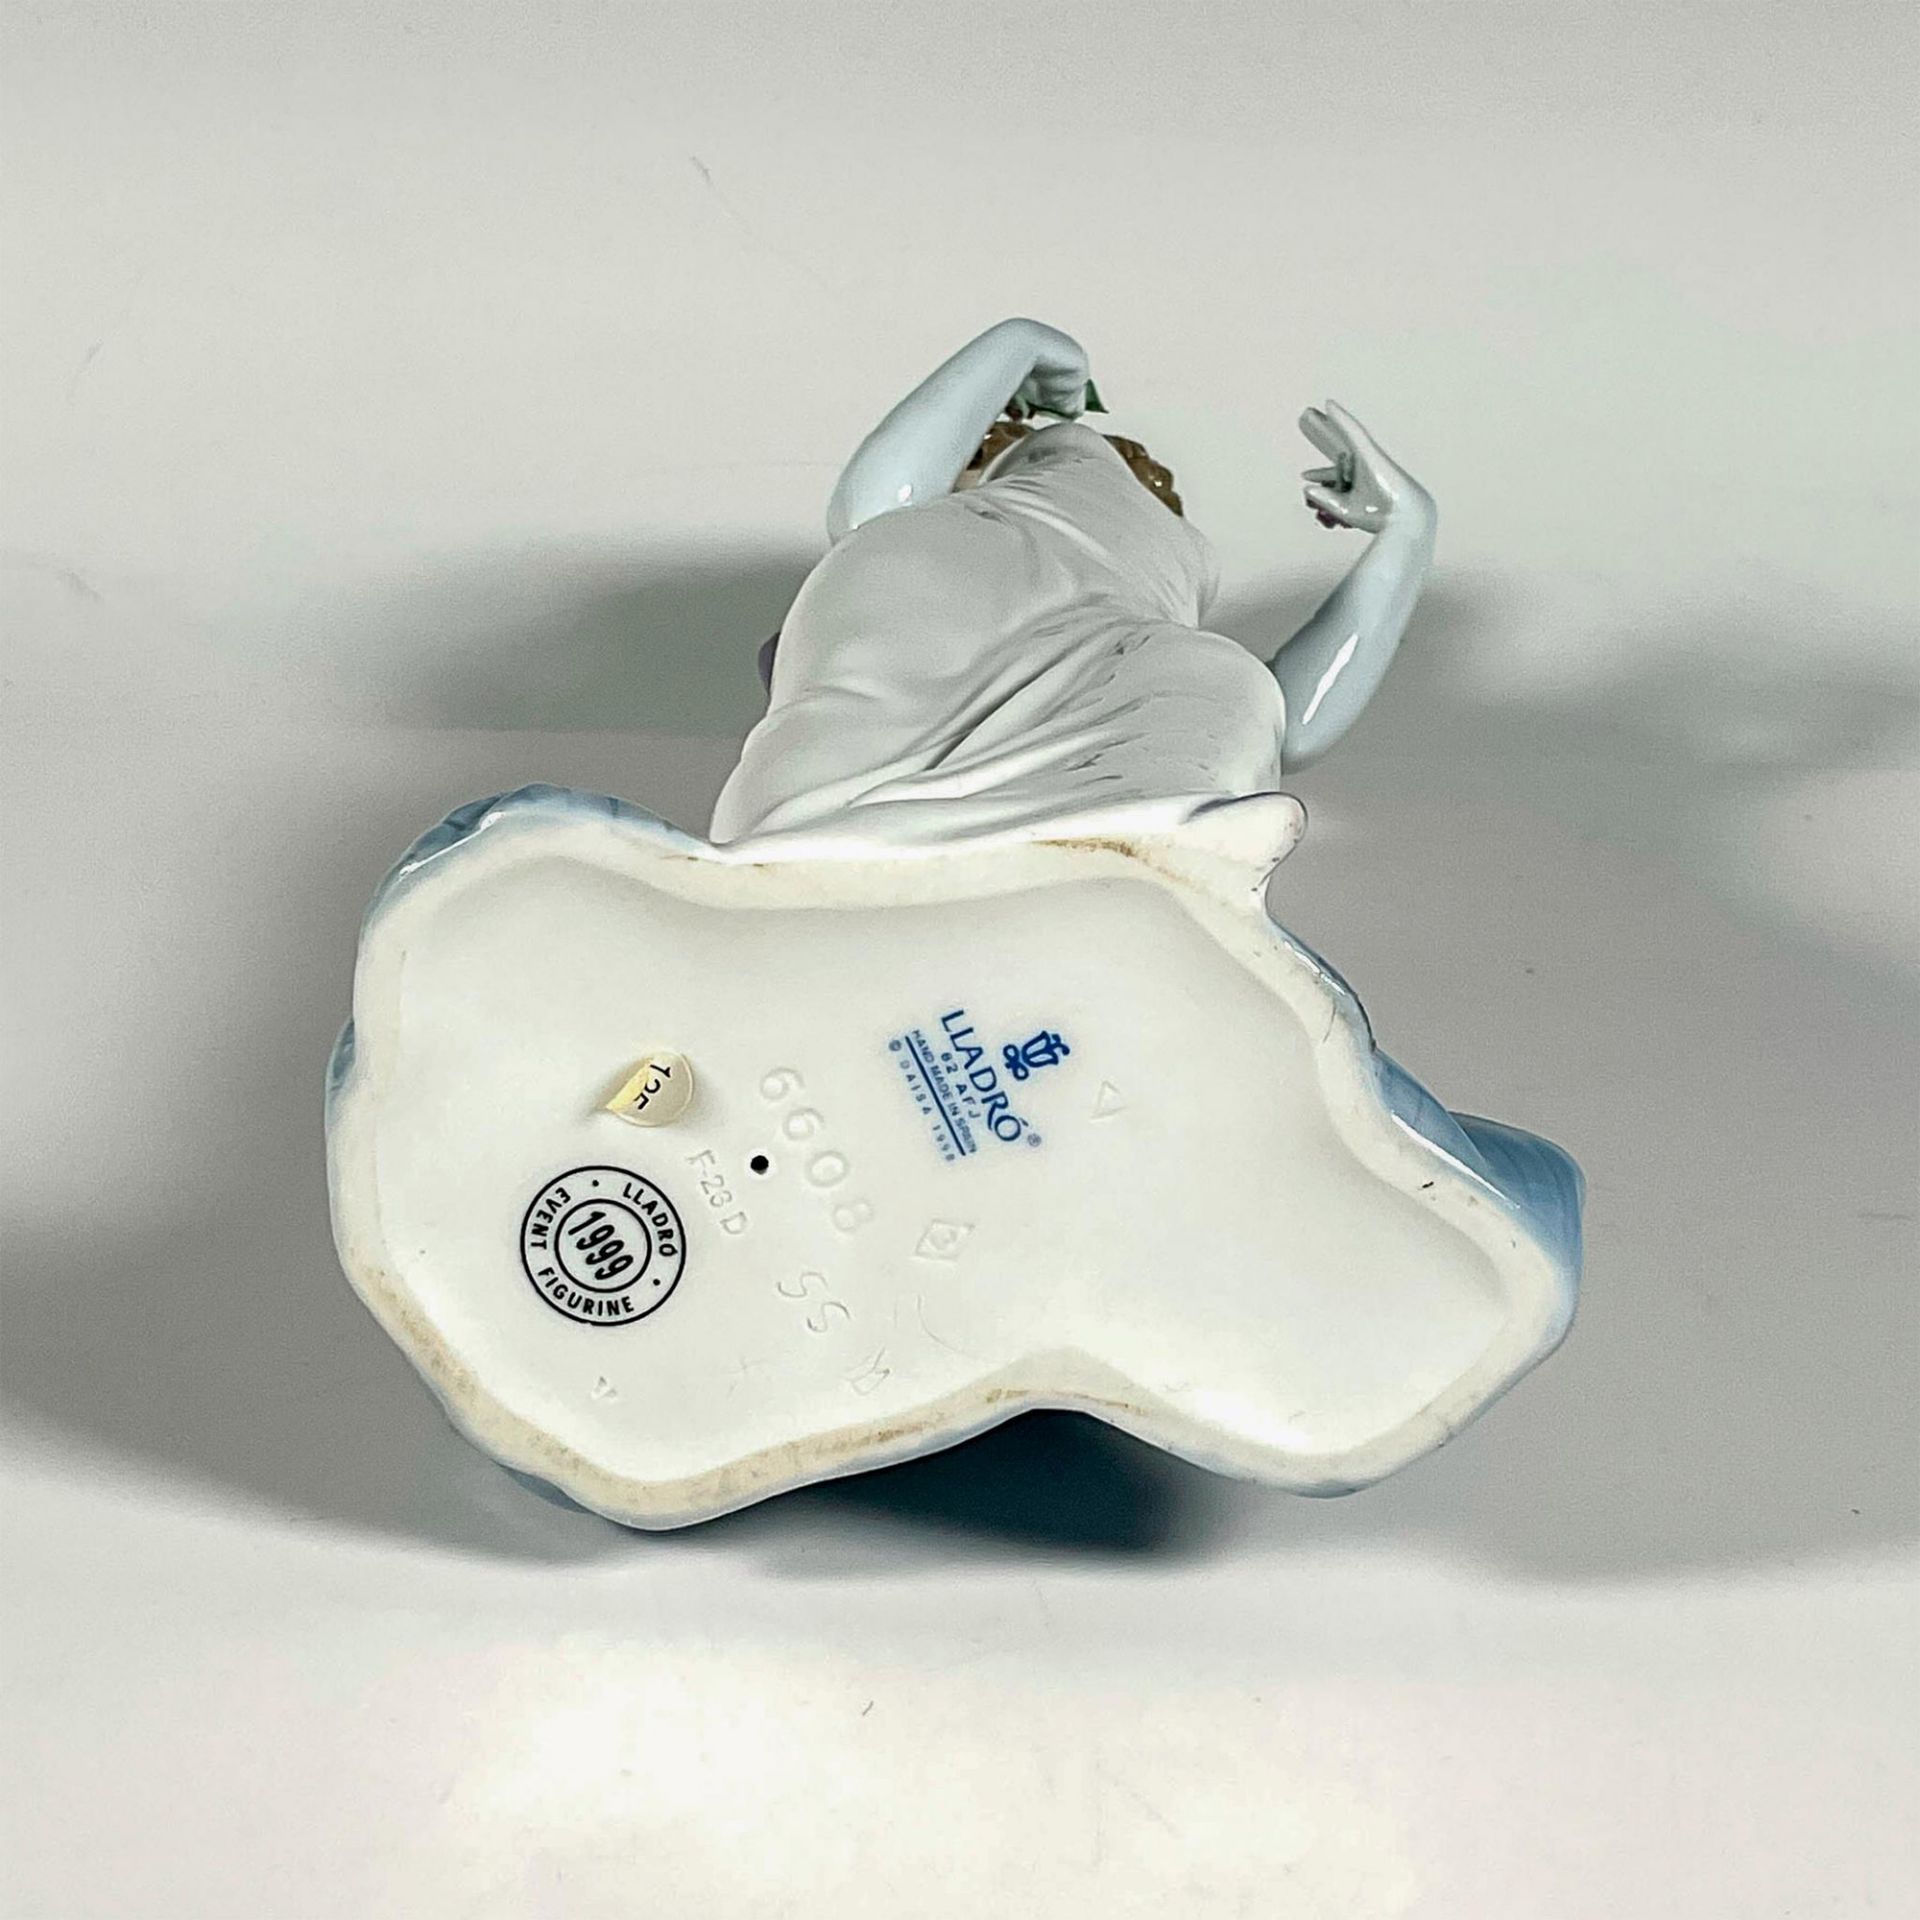 Anticipation 1006608 - Lladro Porcelain Figurine - Image 3 of 4